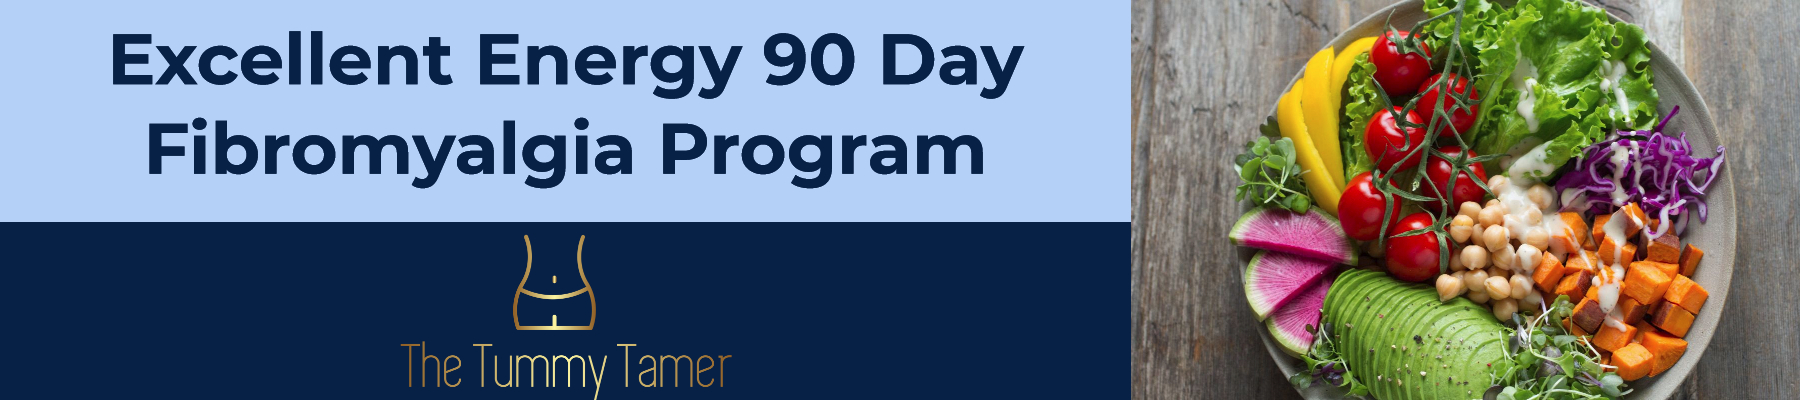 Excellent Energy Fibromyalgia 90 day program banner